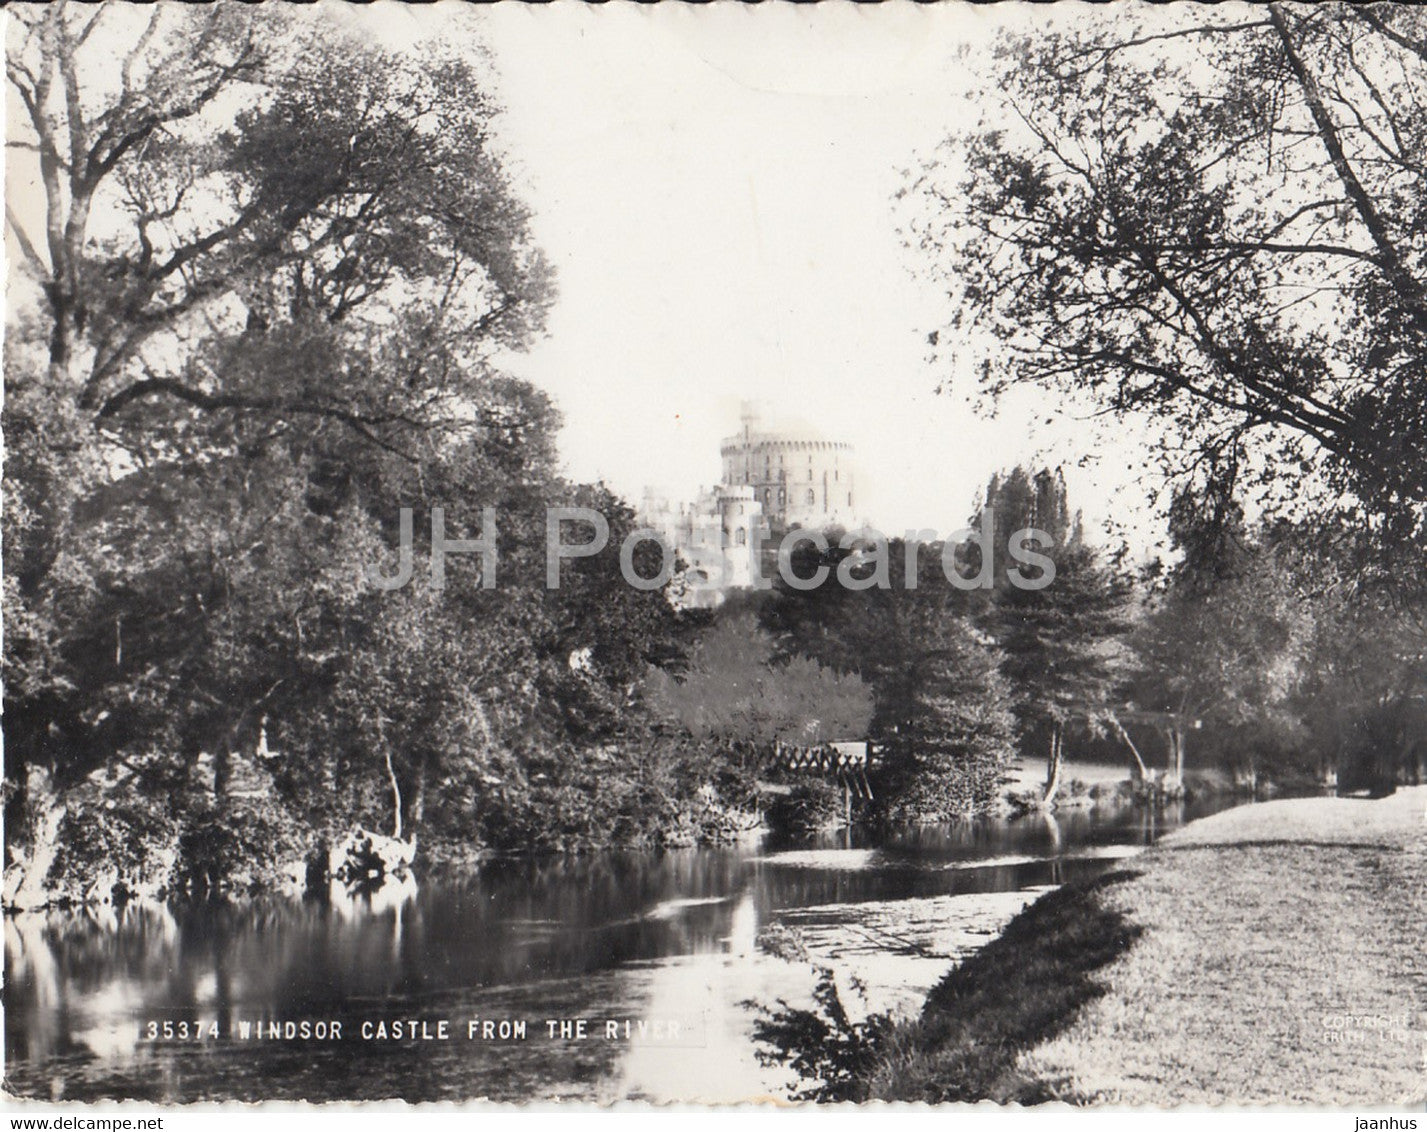 Windsor Castle from the River - 35374 - old postcard - 1953 - England - United Kingdom - used - JH Postcards